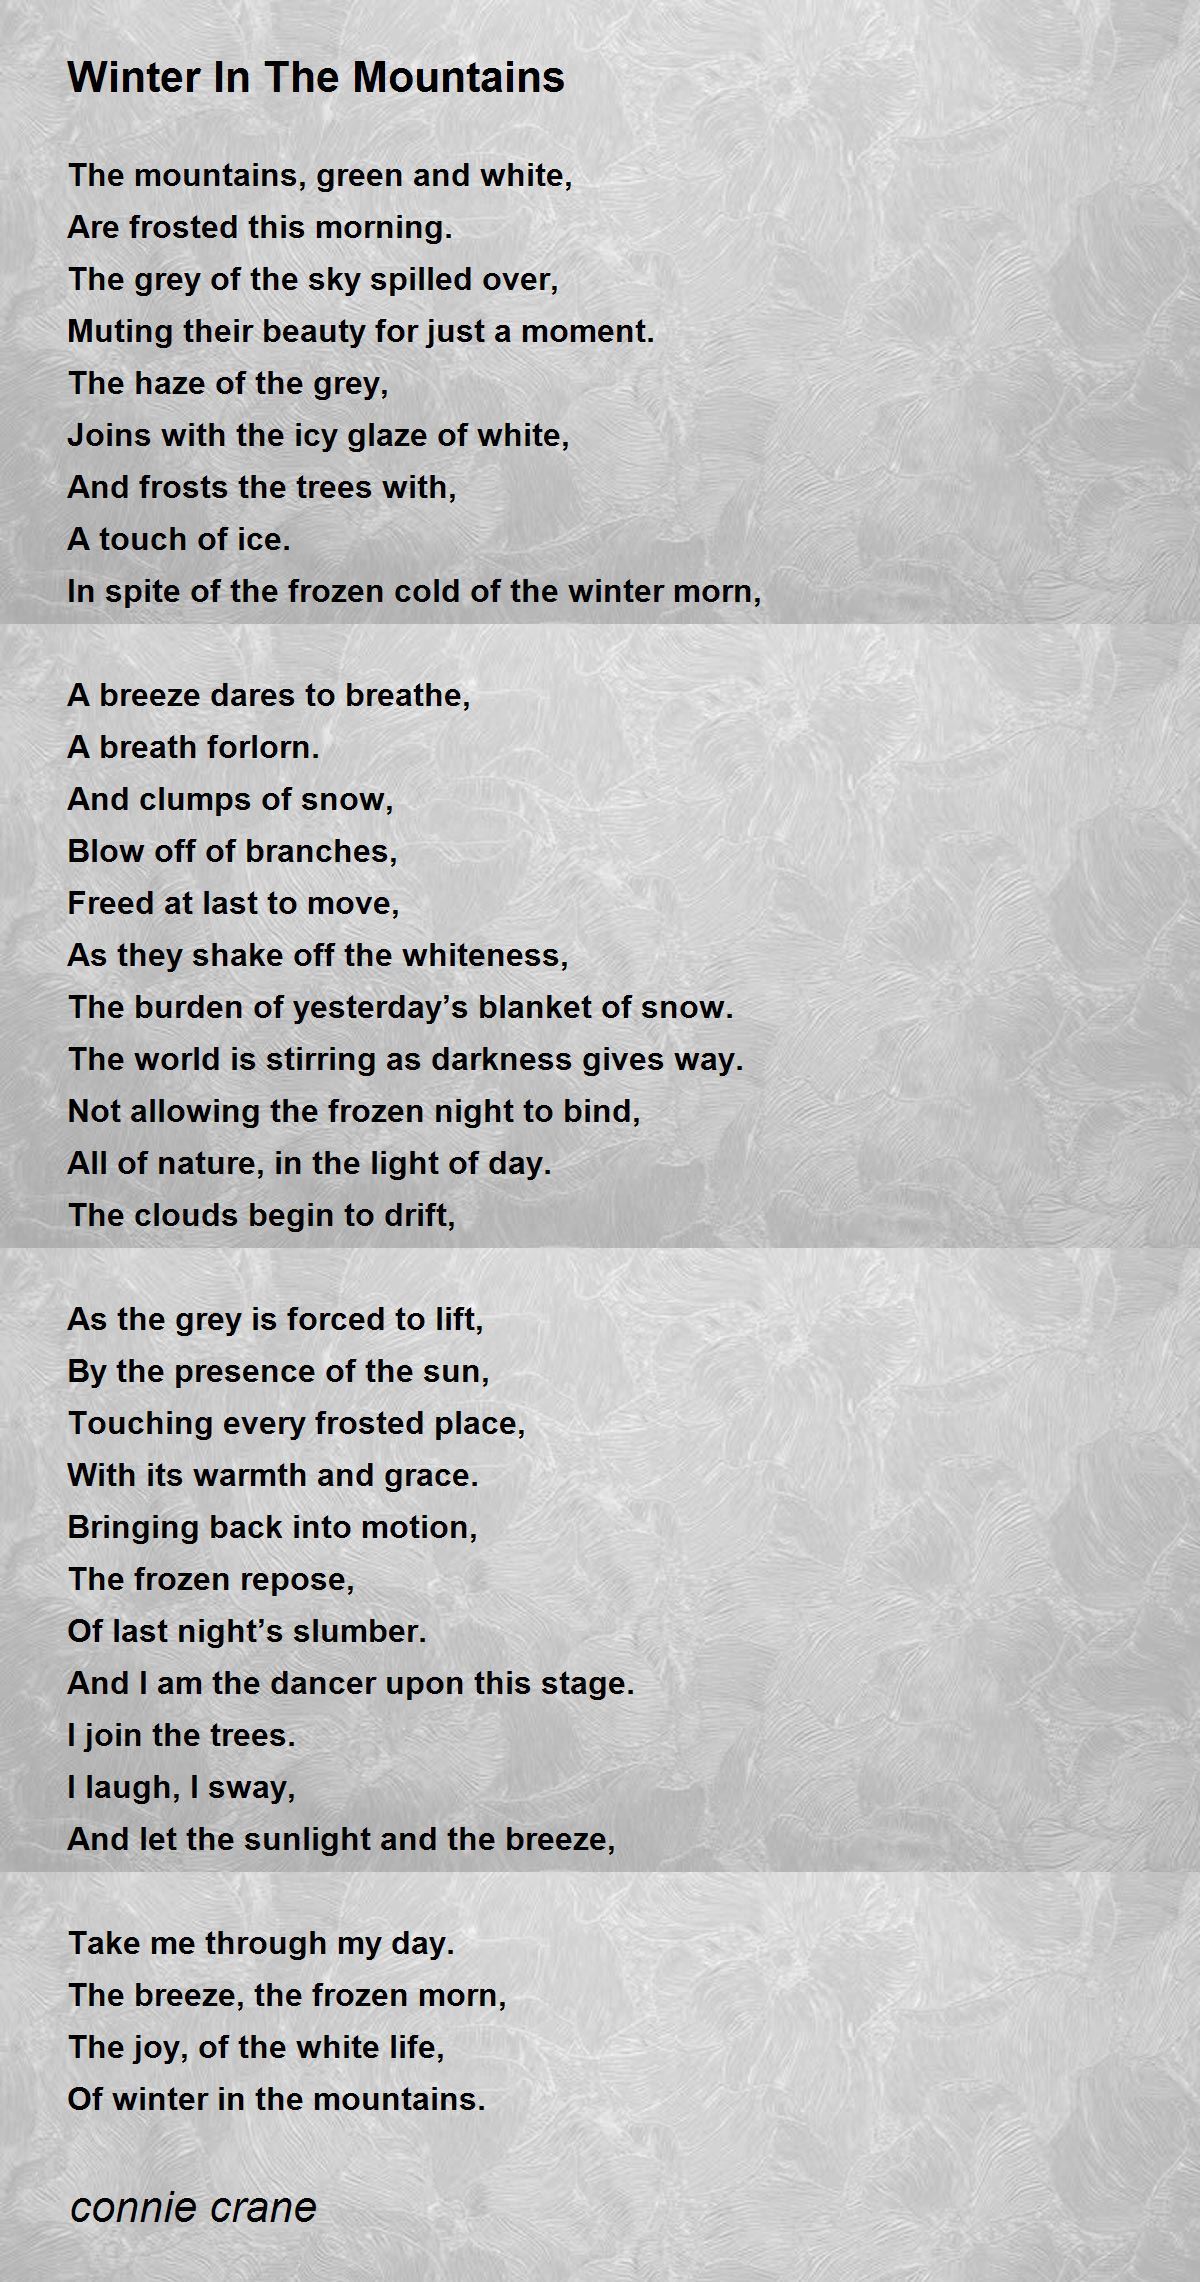 Winter In The Mountains - Winter In The Mountains Poem by connie crane